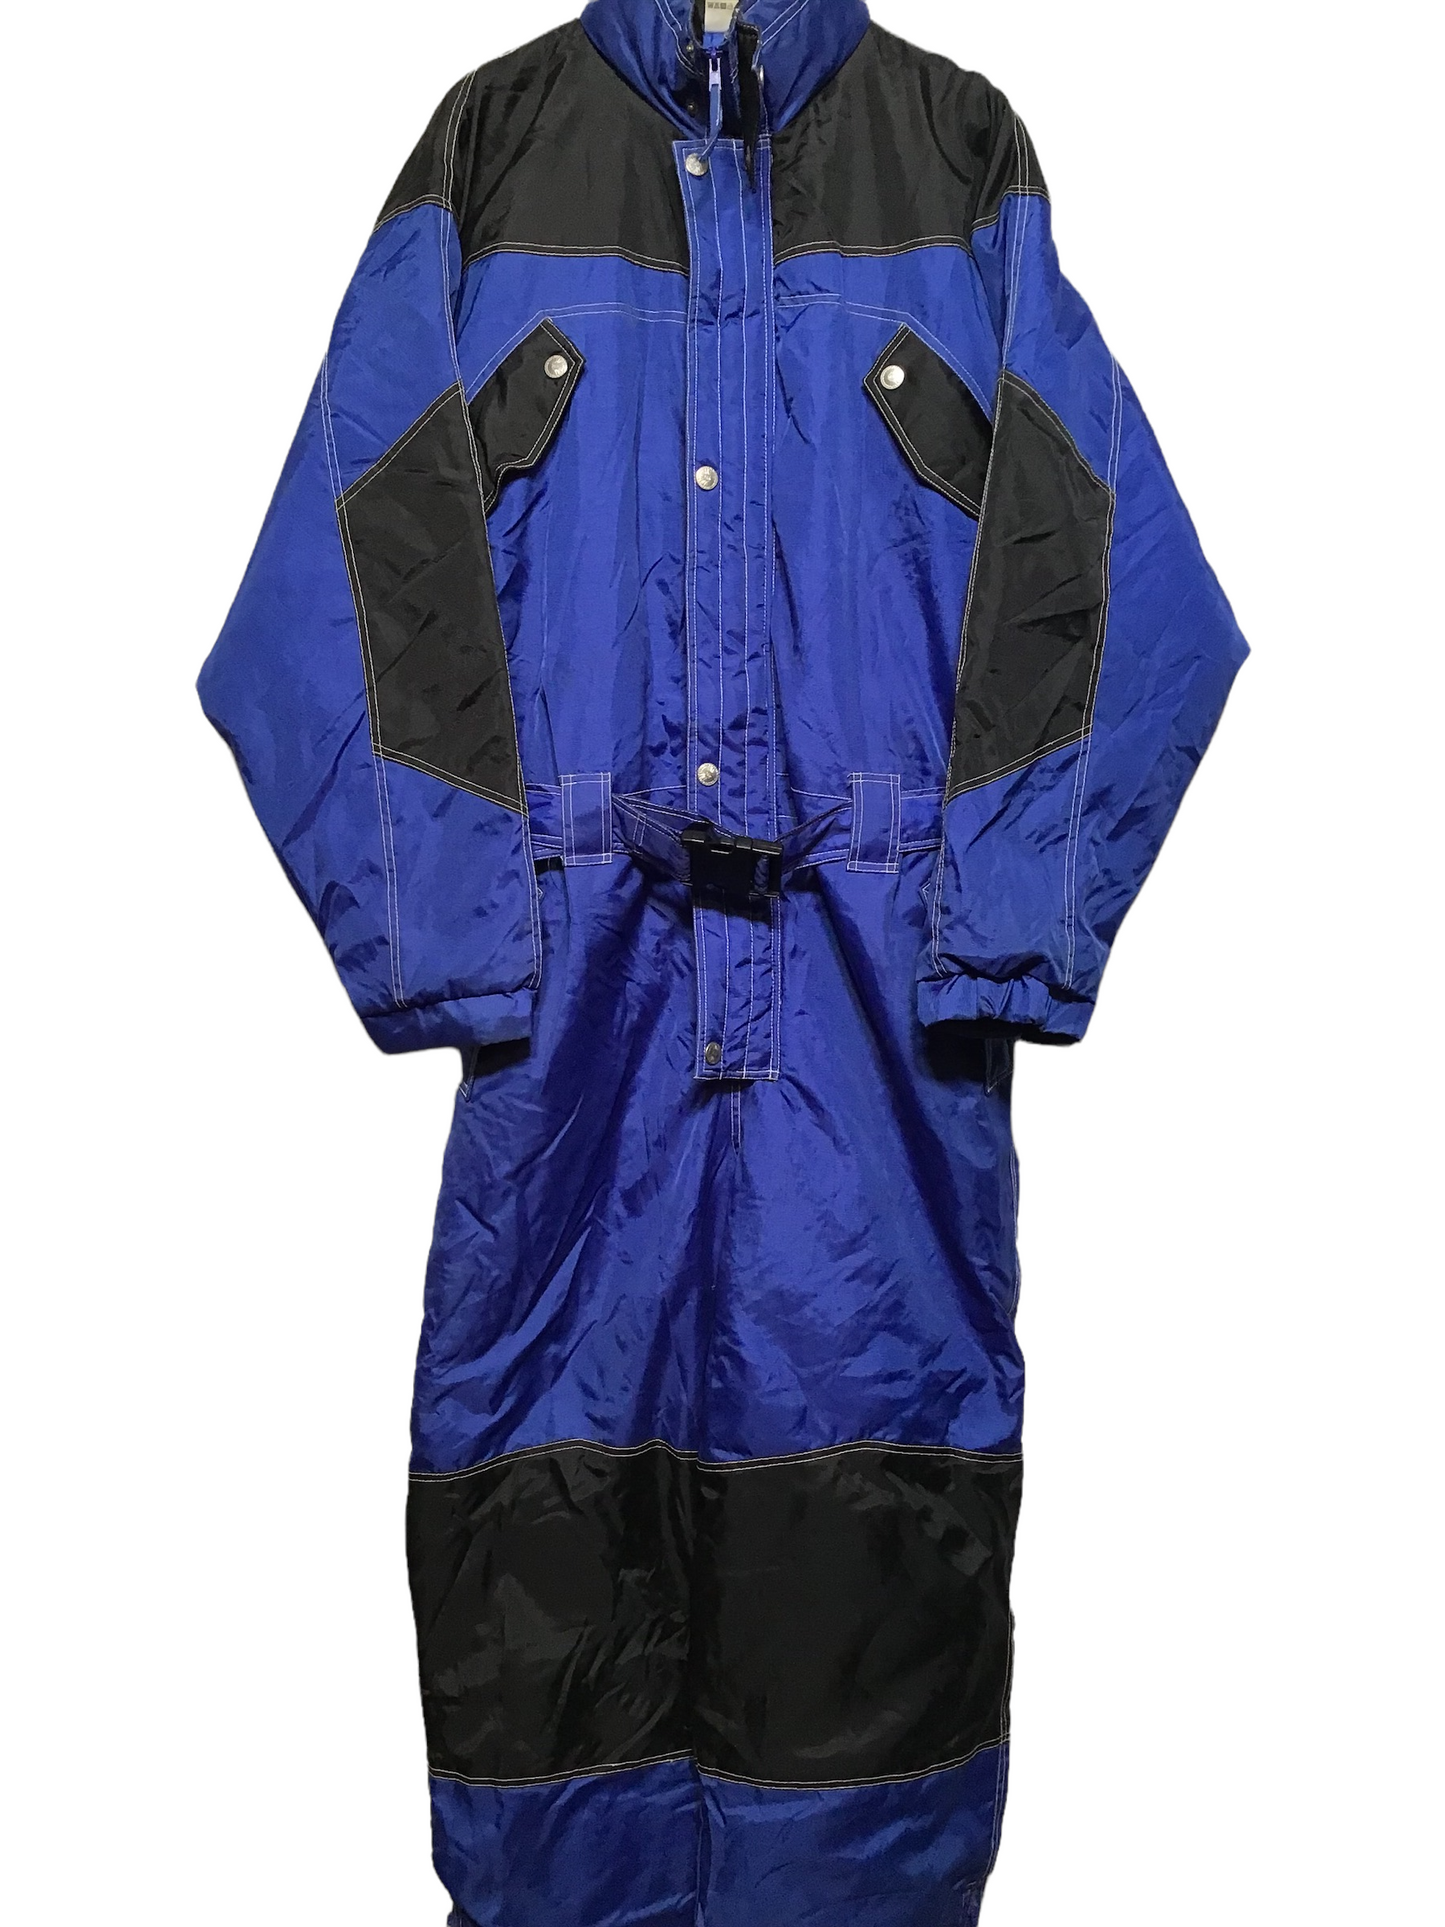 Blue Ski Suit (Size XXL)